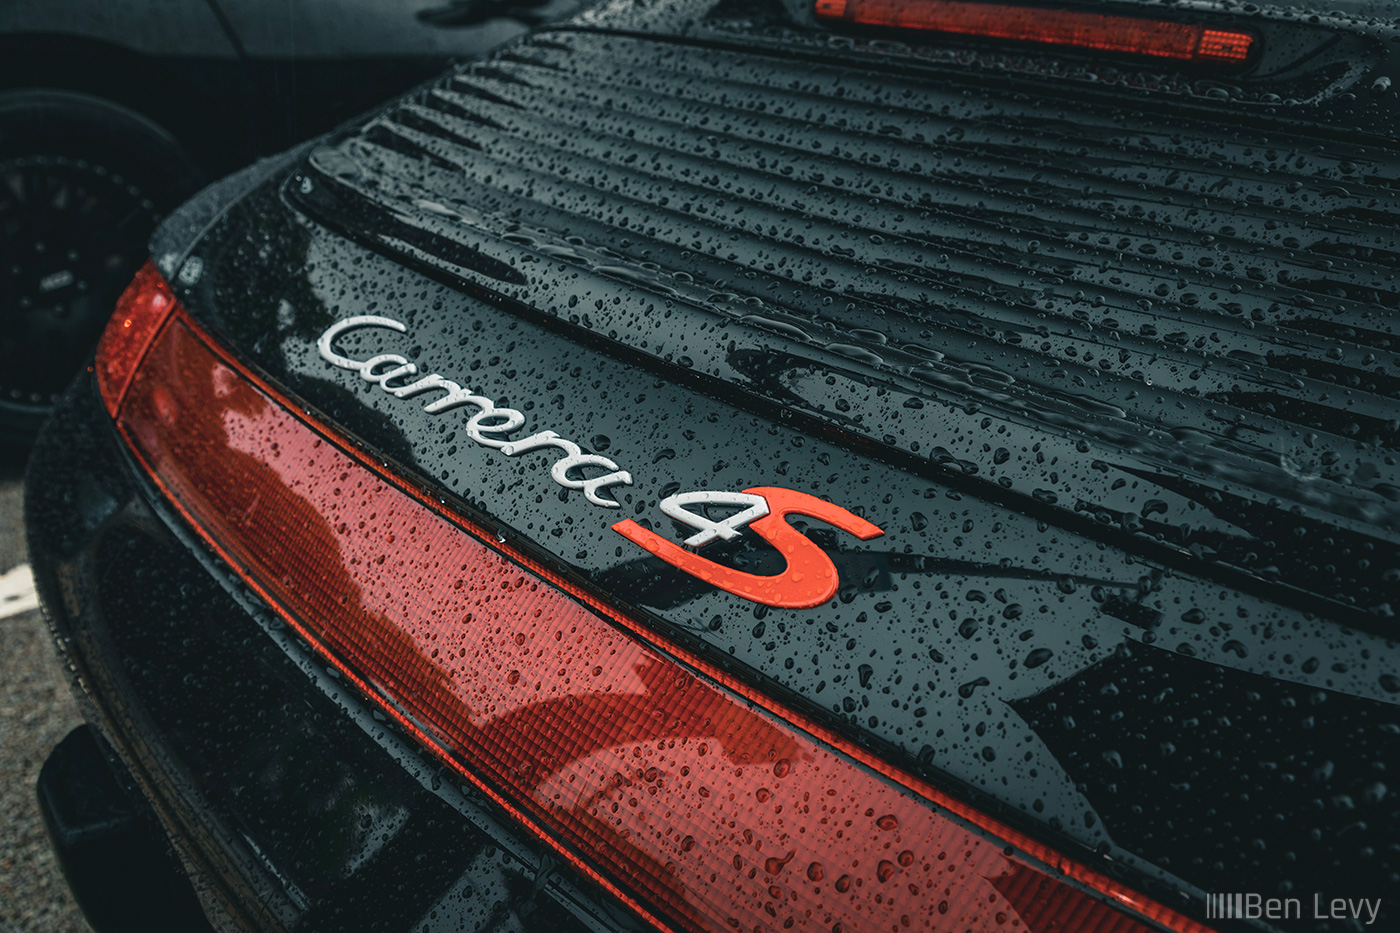 Carrera 4S Badge on Black 996